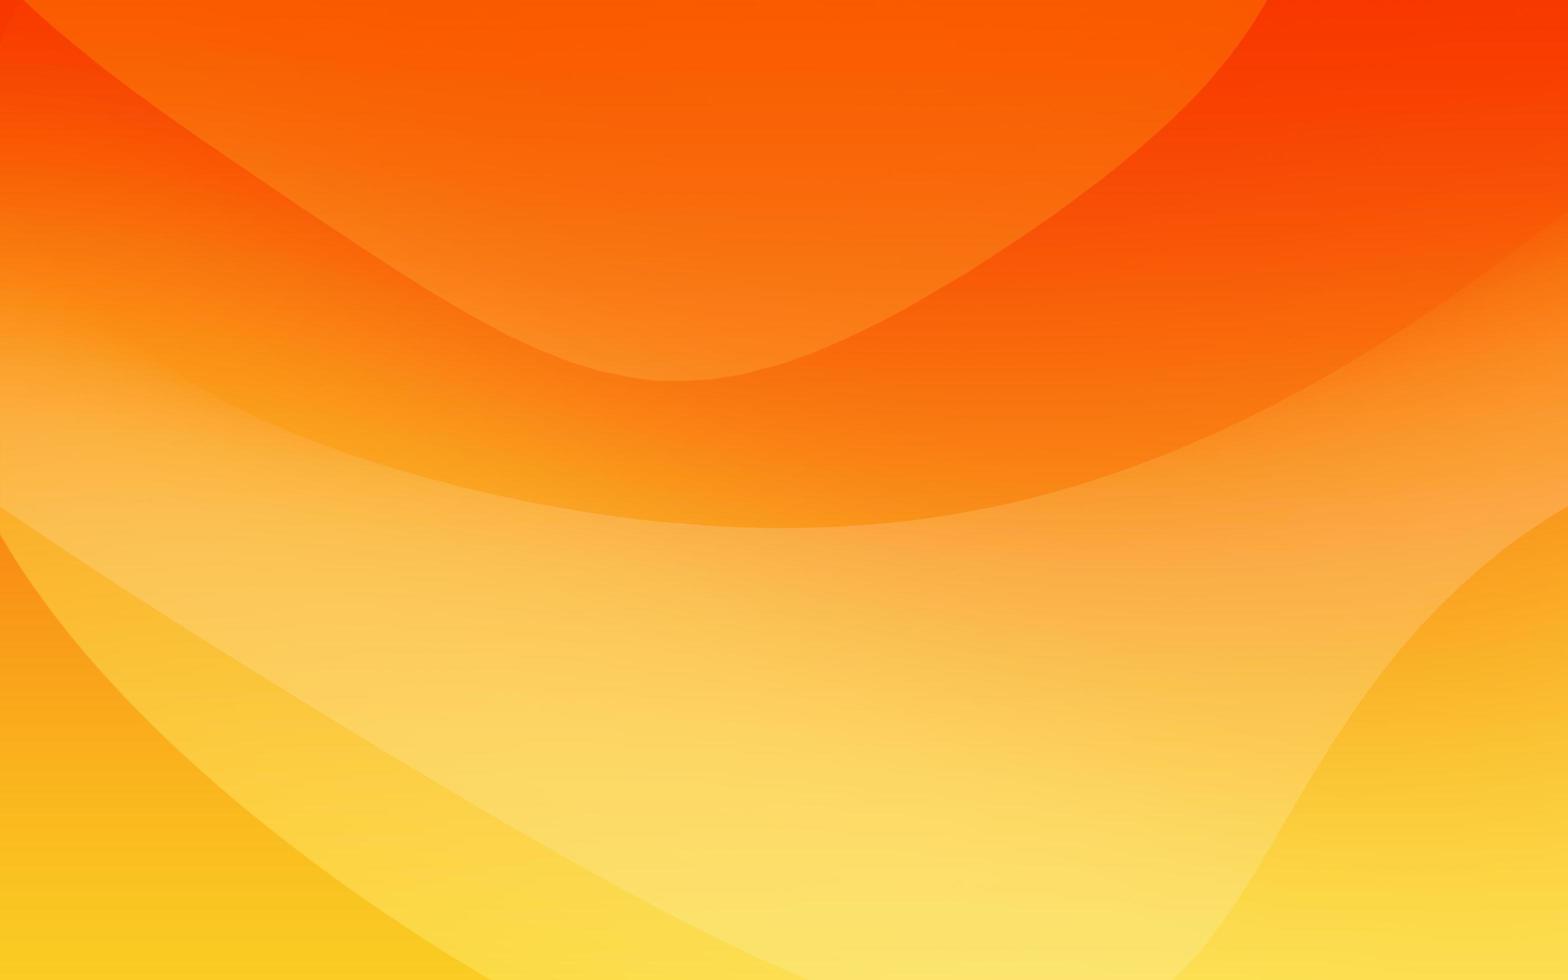 Abstract Orange Curve Background Illustration photo